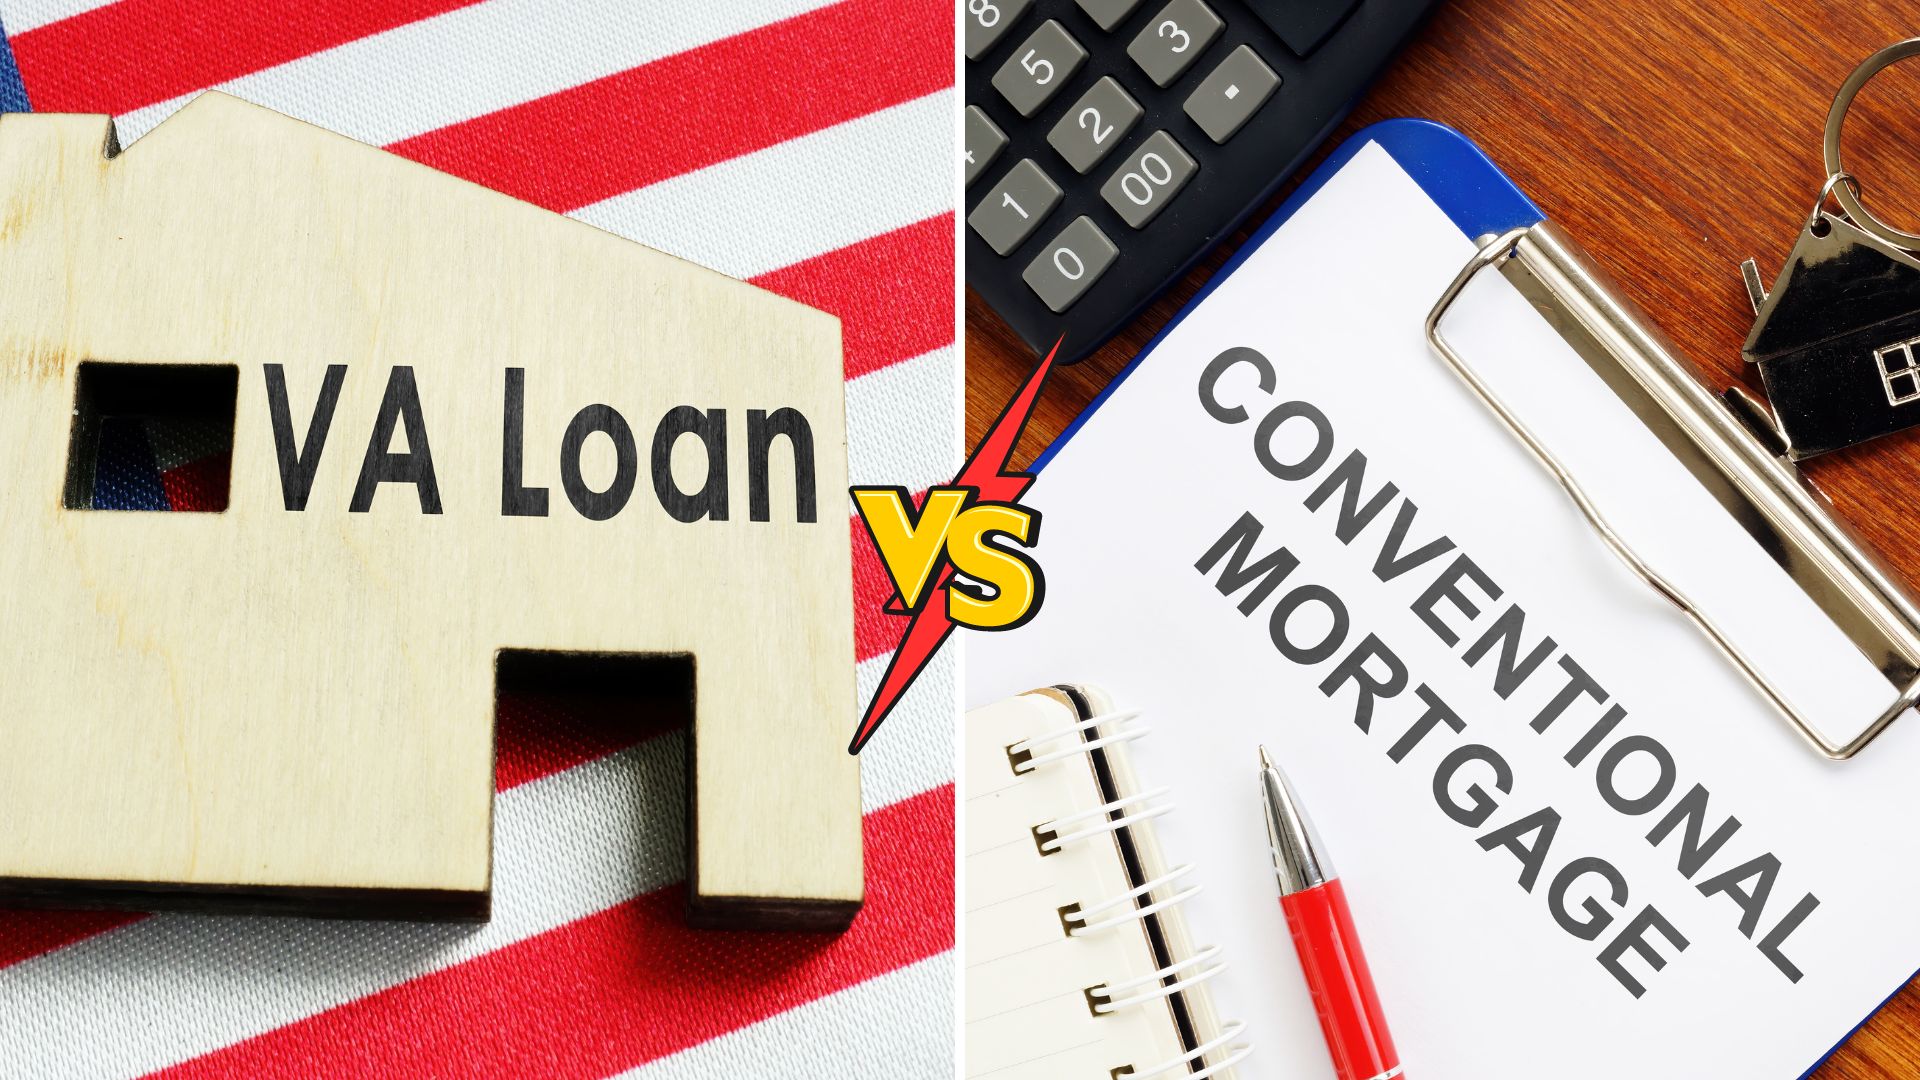 VA Loan vs. Conventional Loan